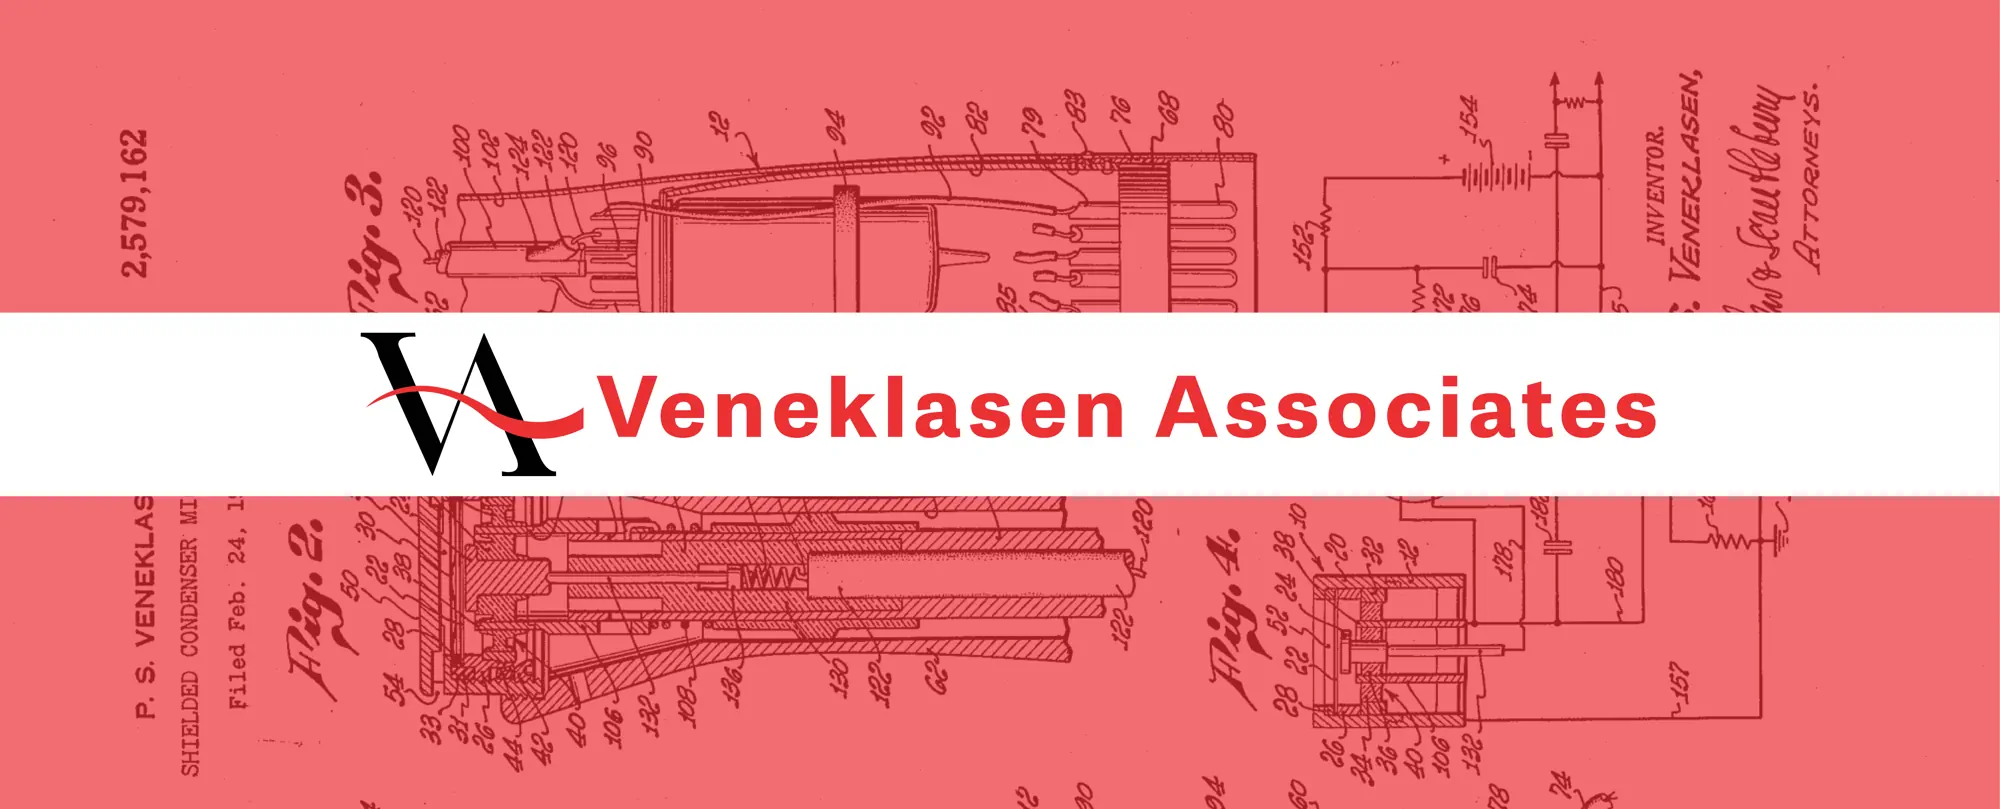 Veneklasen Associates logo on patent schematic diagram.